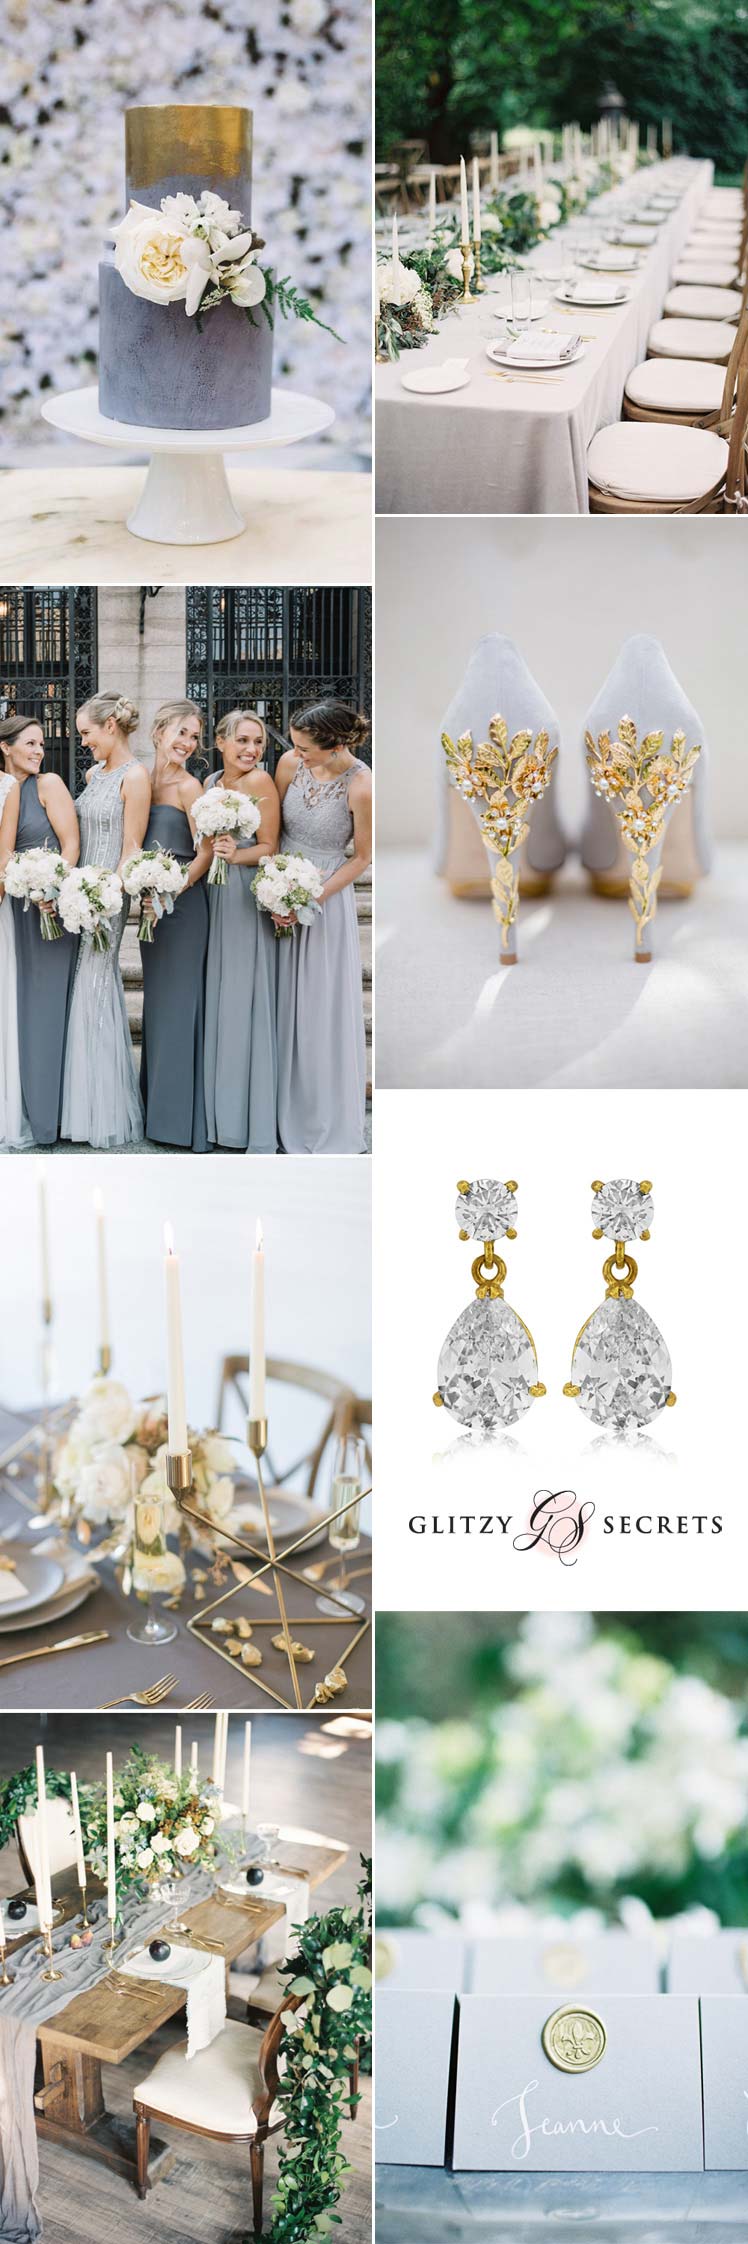 Gold and grey wedding inspiration